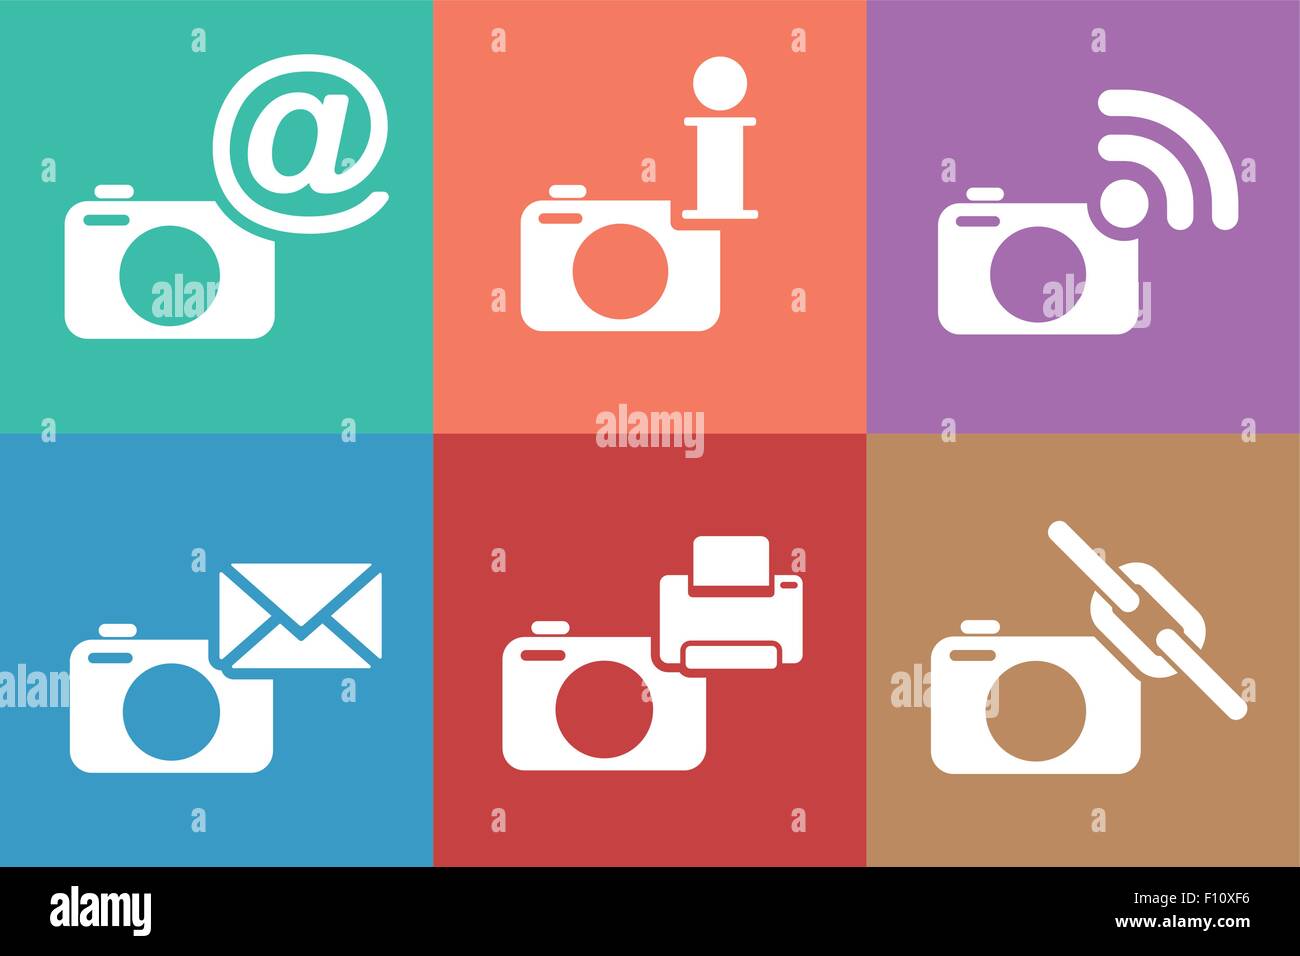 Camera web icons set. Send, print, link image symbols vector illustration. Stock Vector